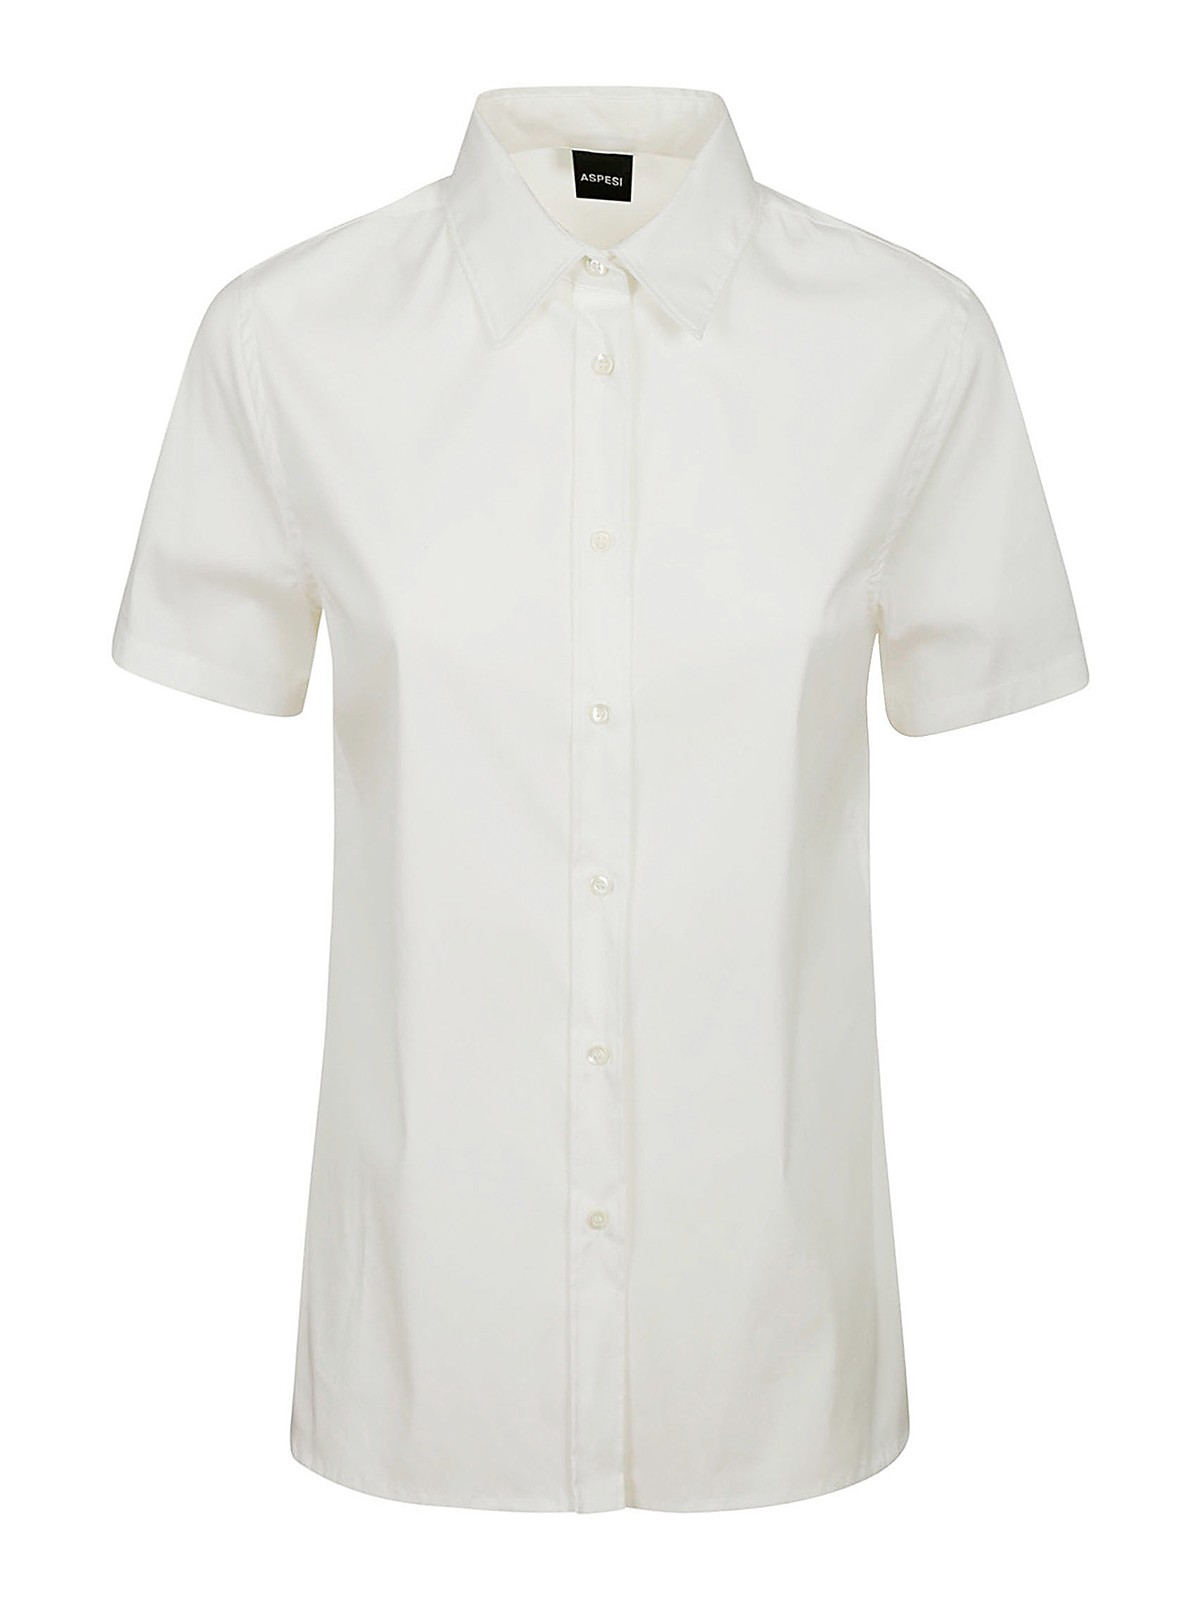 Aspesi Shirt Mod.5447 In White